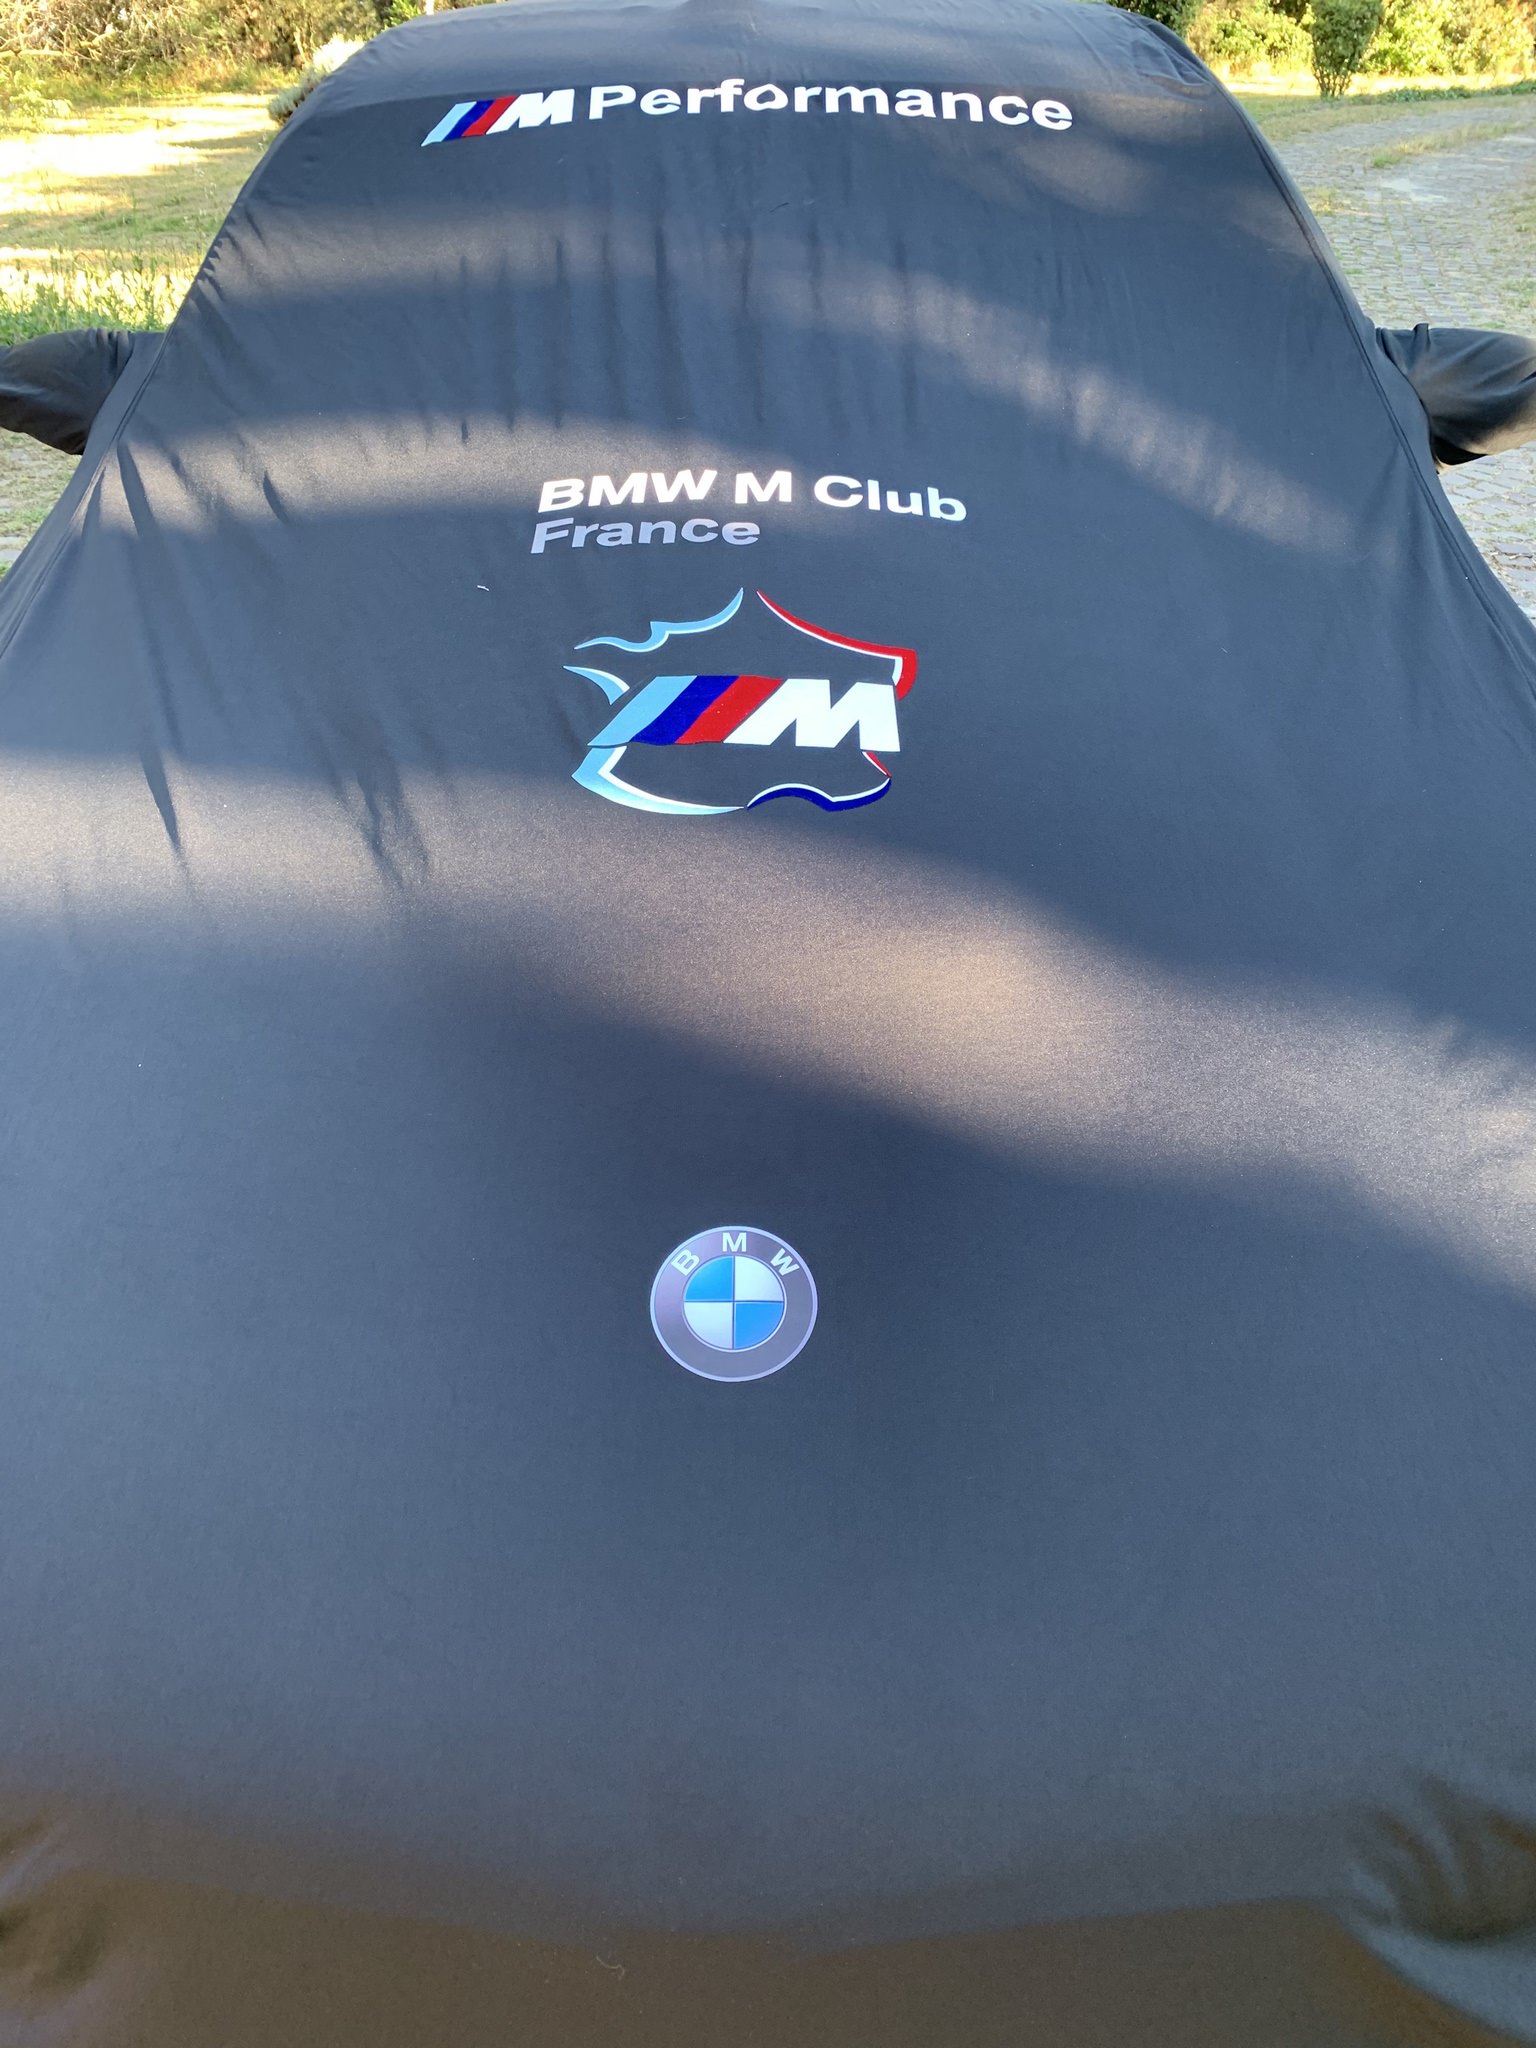 Housse extérieure By Cover Company – BMW M Club France